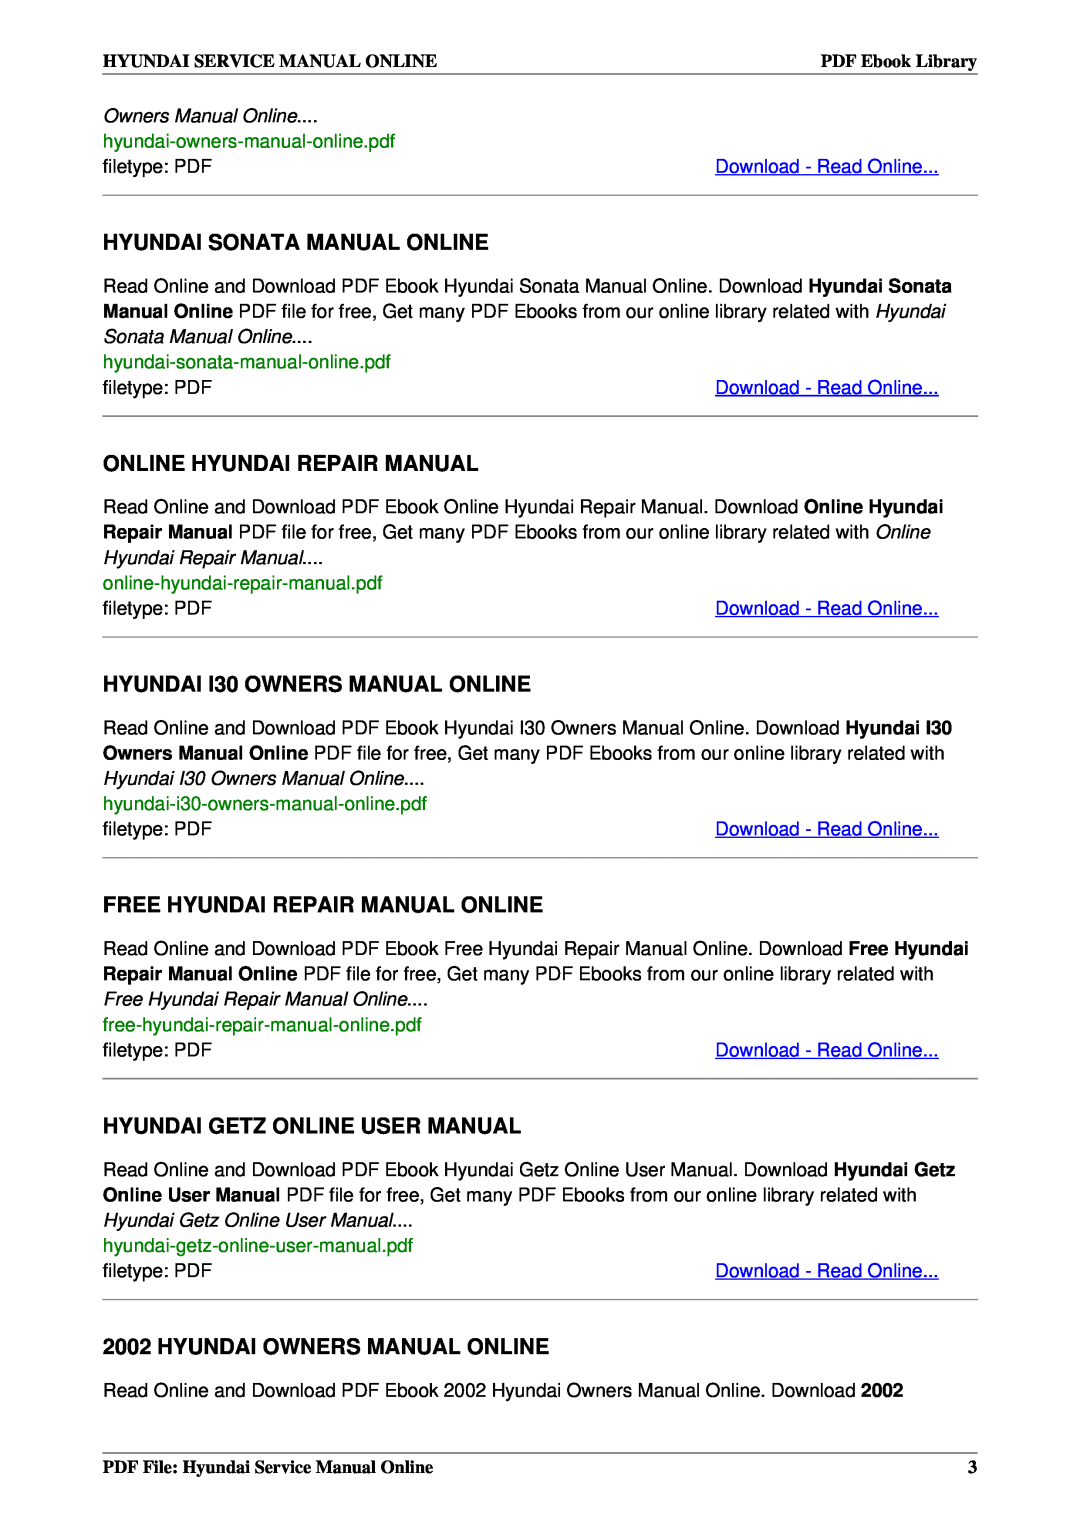 Hyundai I40, I30, I10, I20 Hyundai Sonata Manual Online, Online Hyundai Repair Manual, Free Hyundai Repair Manual Online 